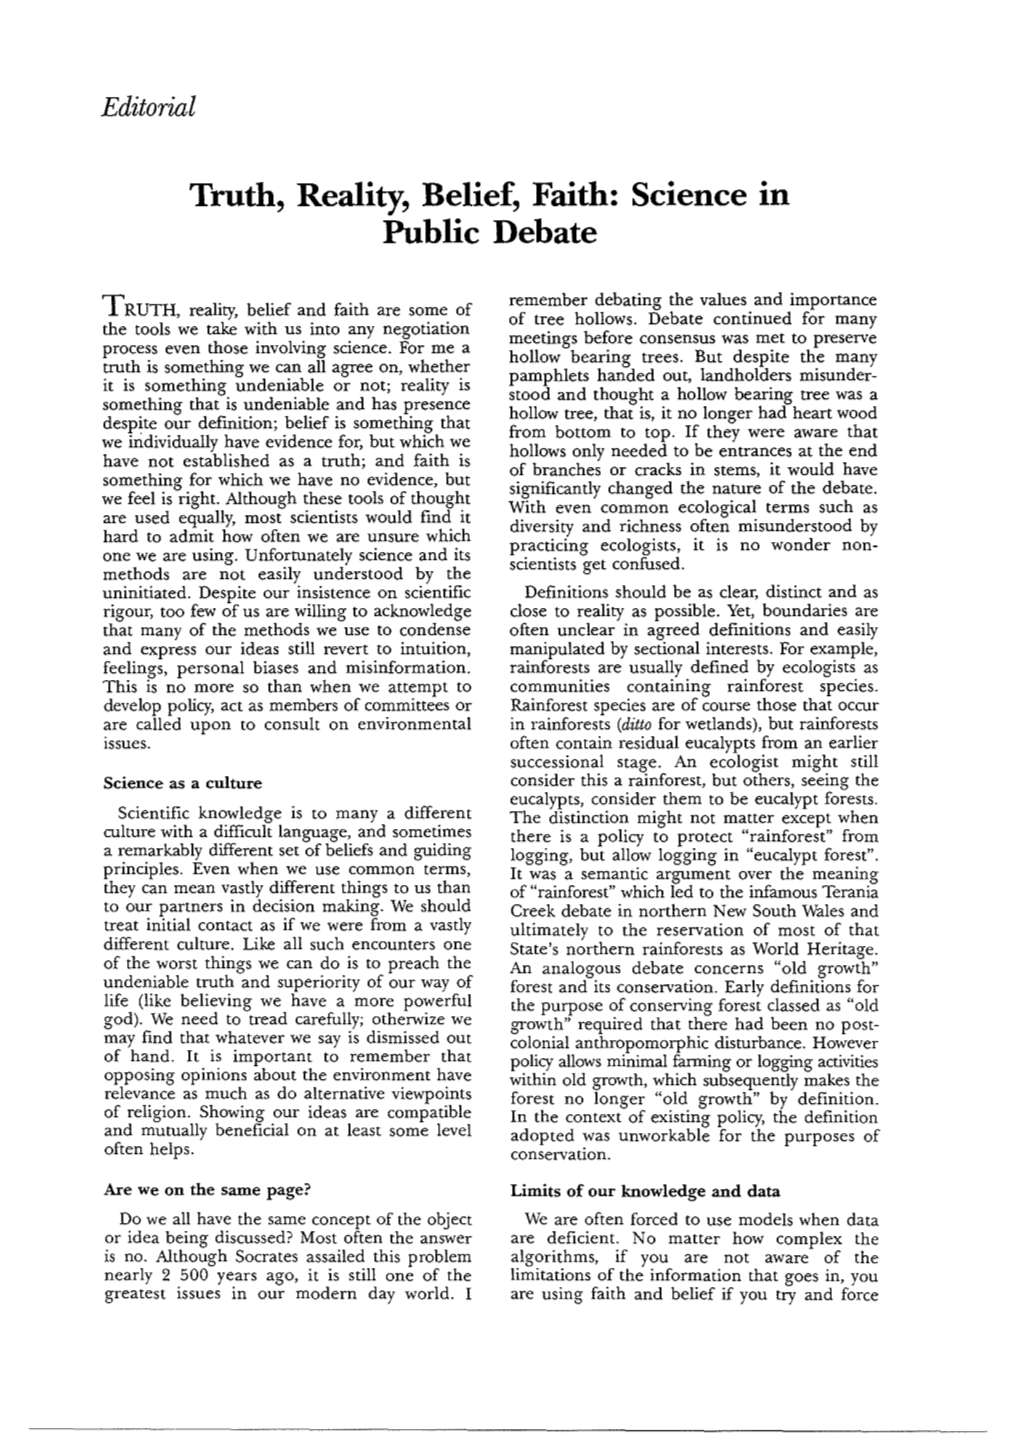 Truth, Reality, Belief, Faith: Science Public Debate